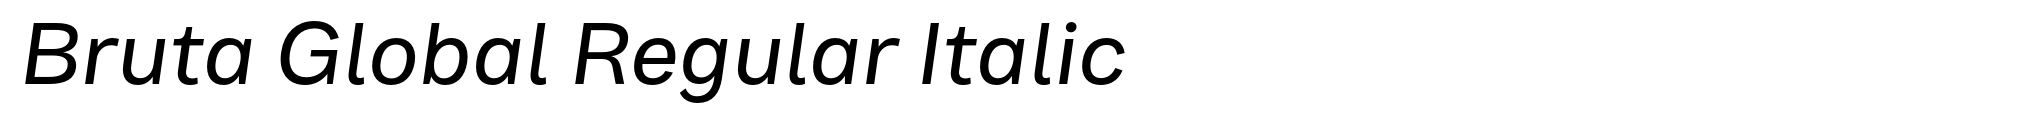 Bruta Global Regular Italic image